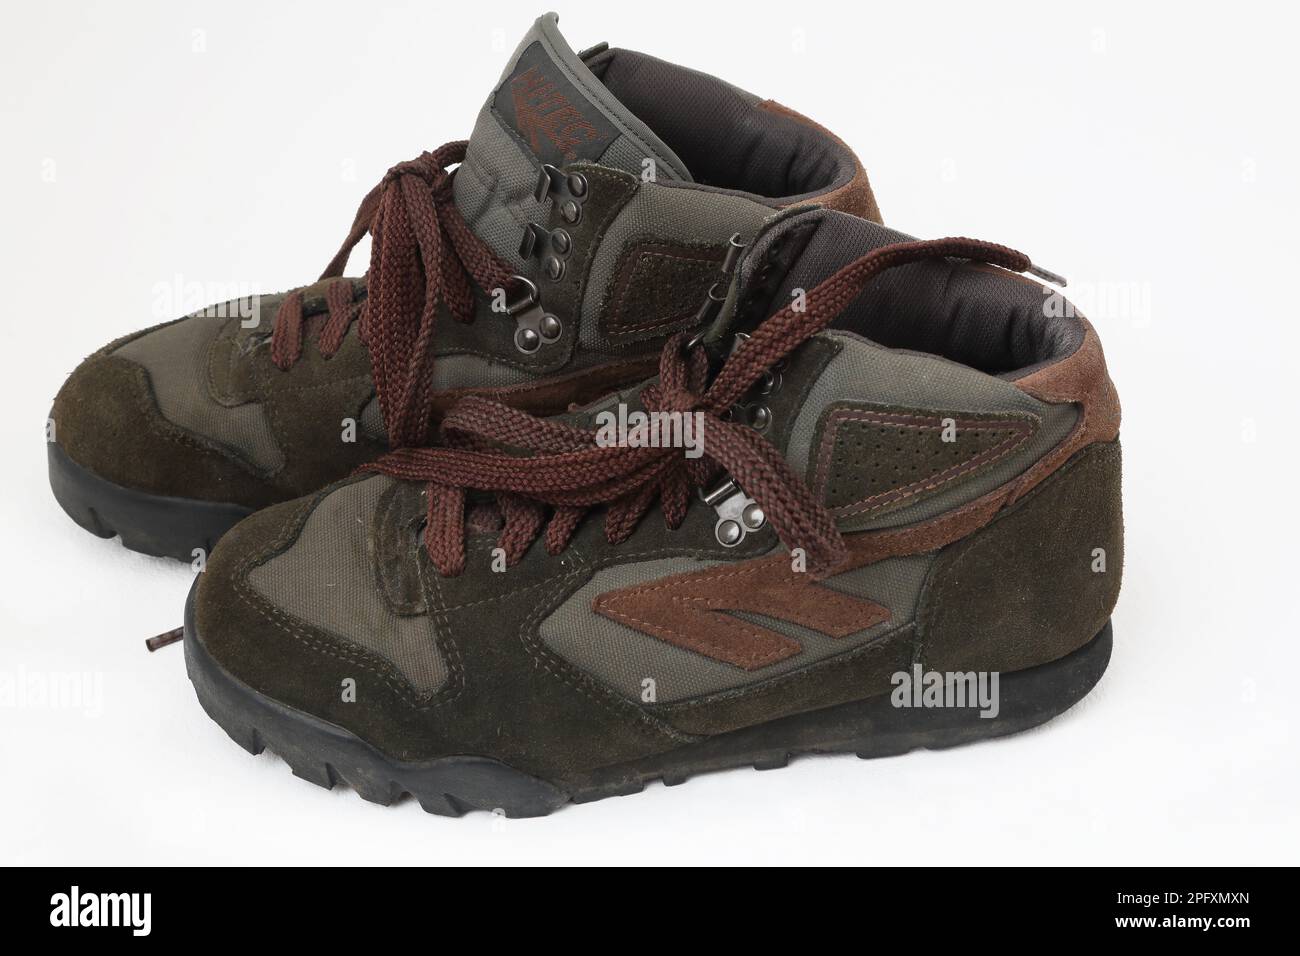 A Pair of Hi-Tec Hiking Boots Stock Photo